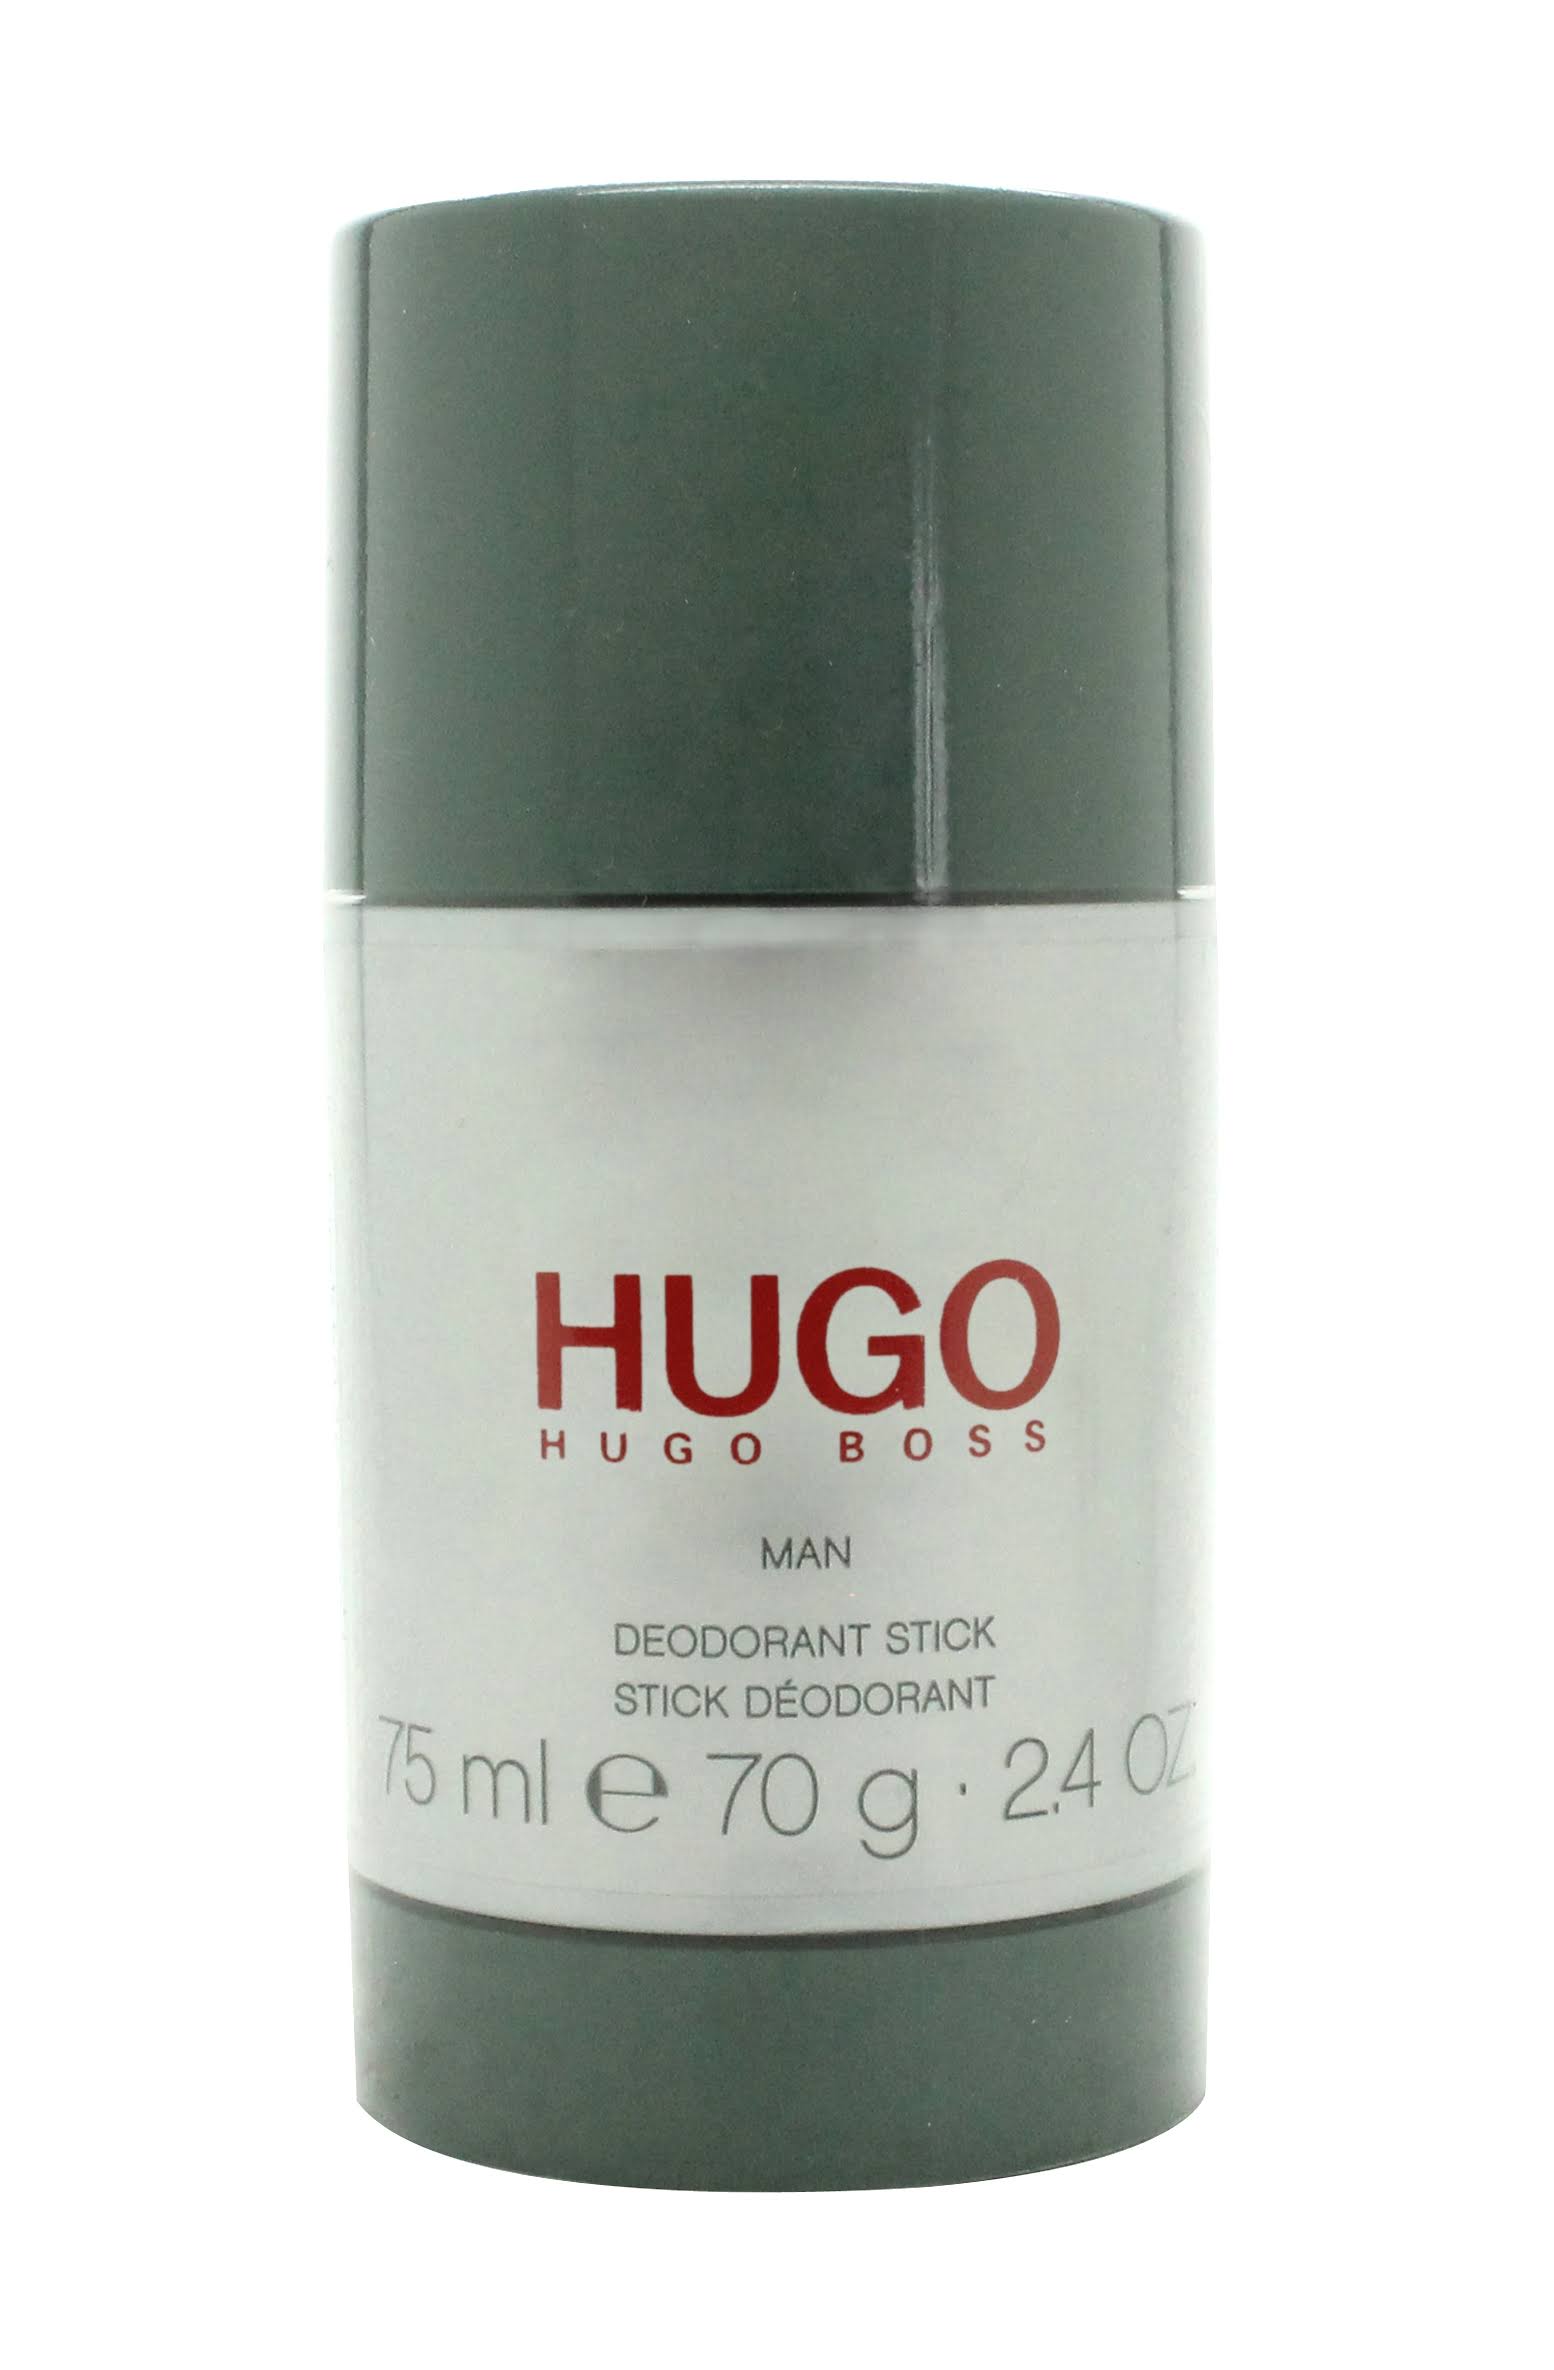 Hugo Boss Man Deodorant Stick - 75 ml